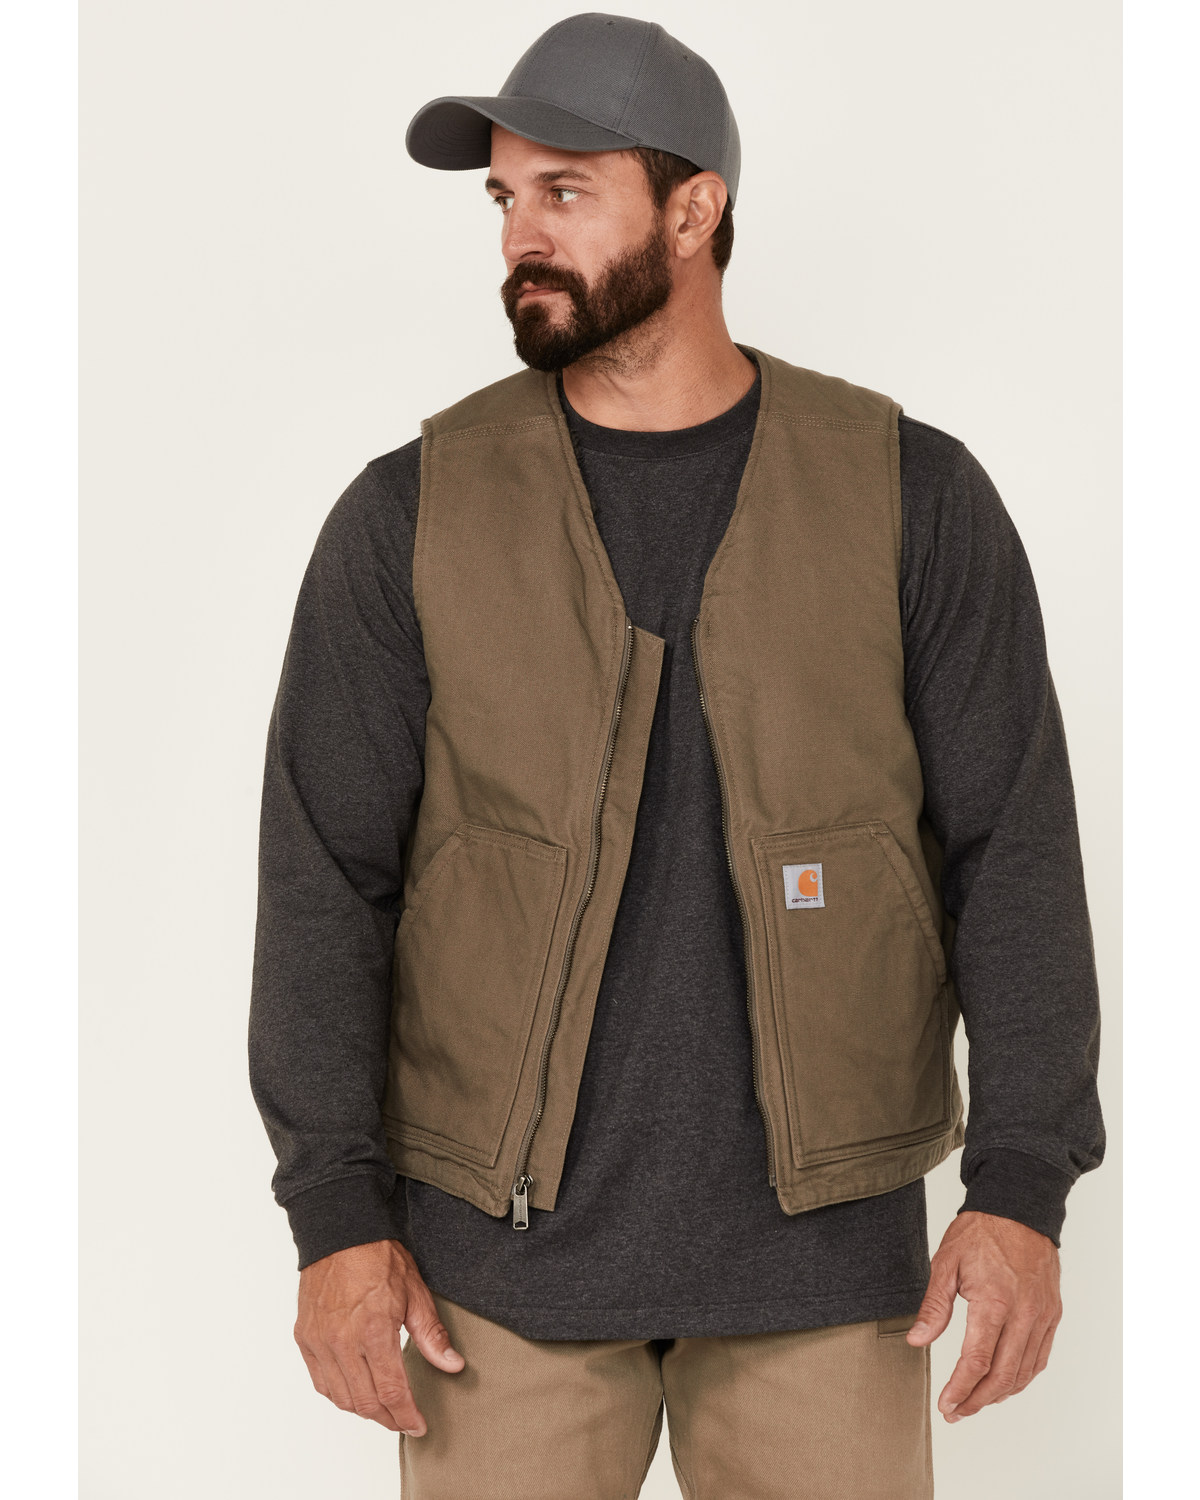 Carhartt Men's Dark Brown Washed Duck Sherpa Lined Vest